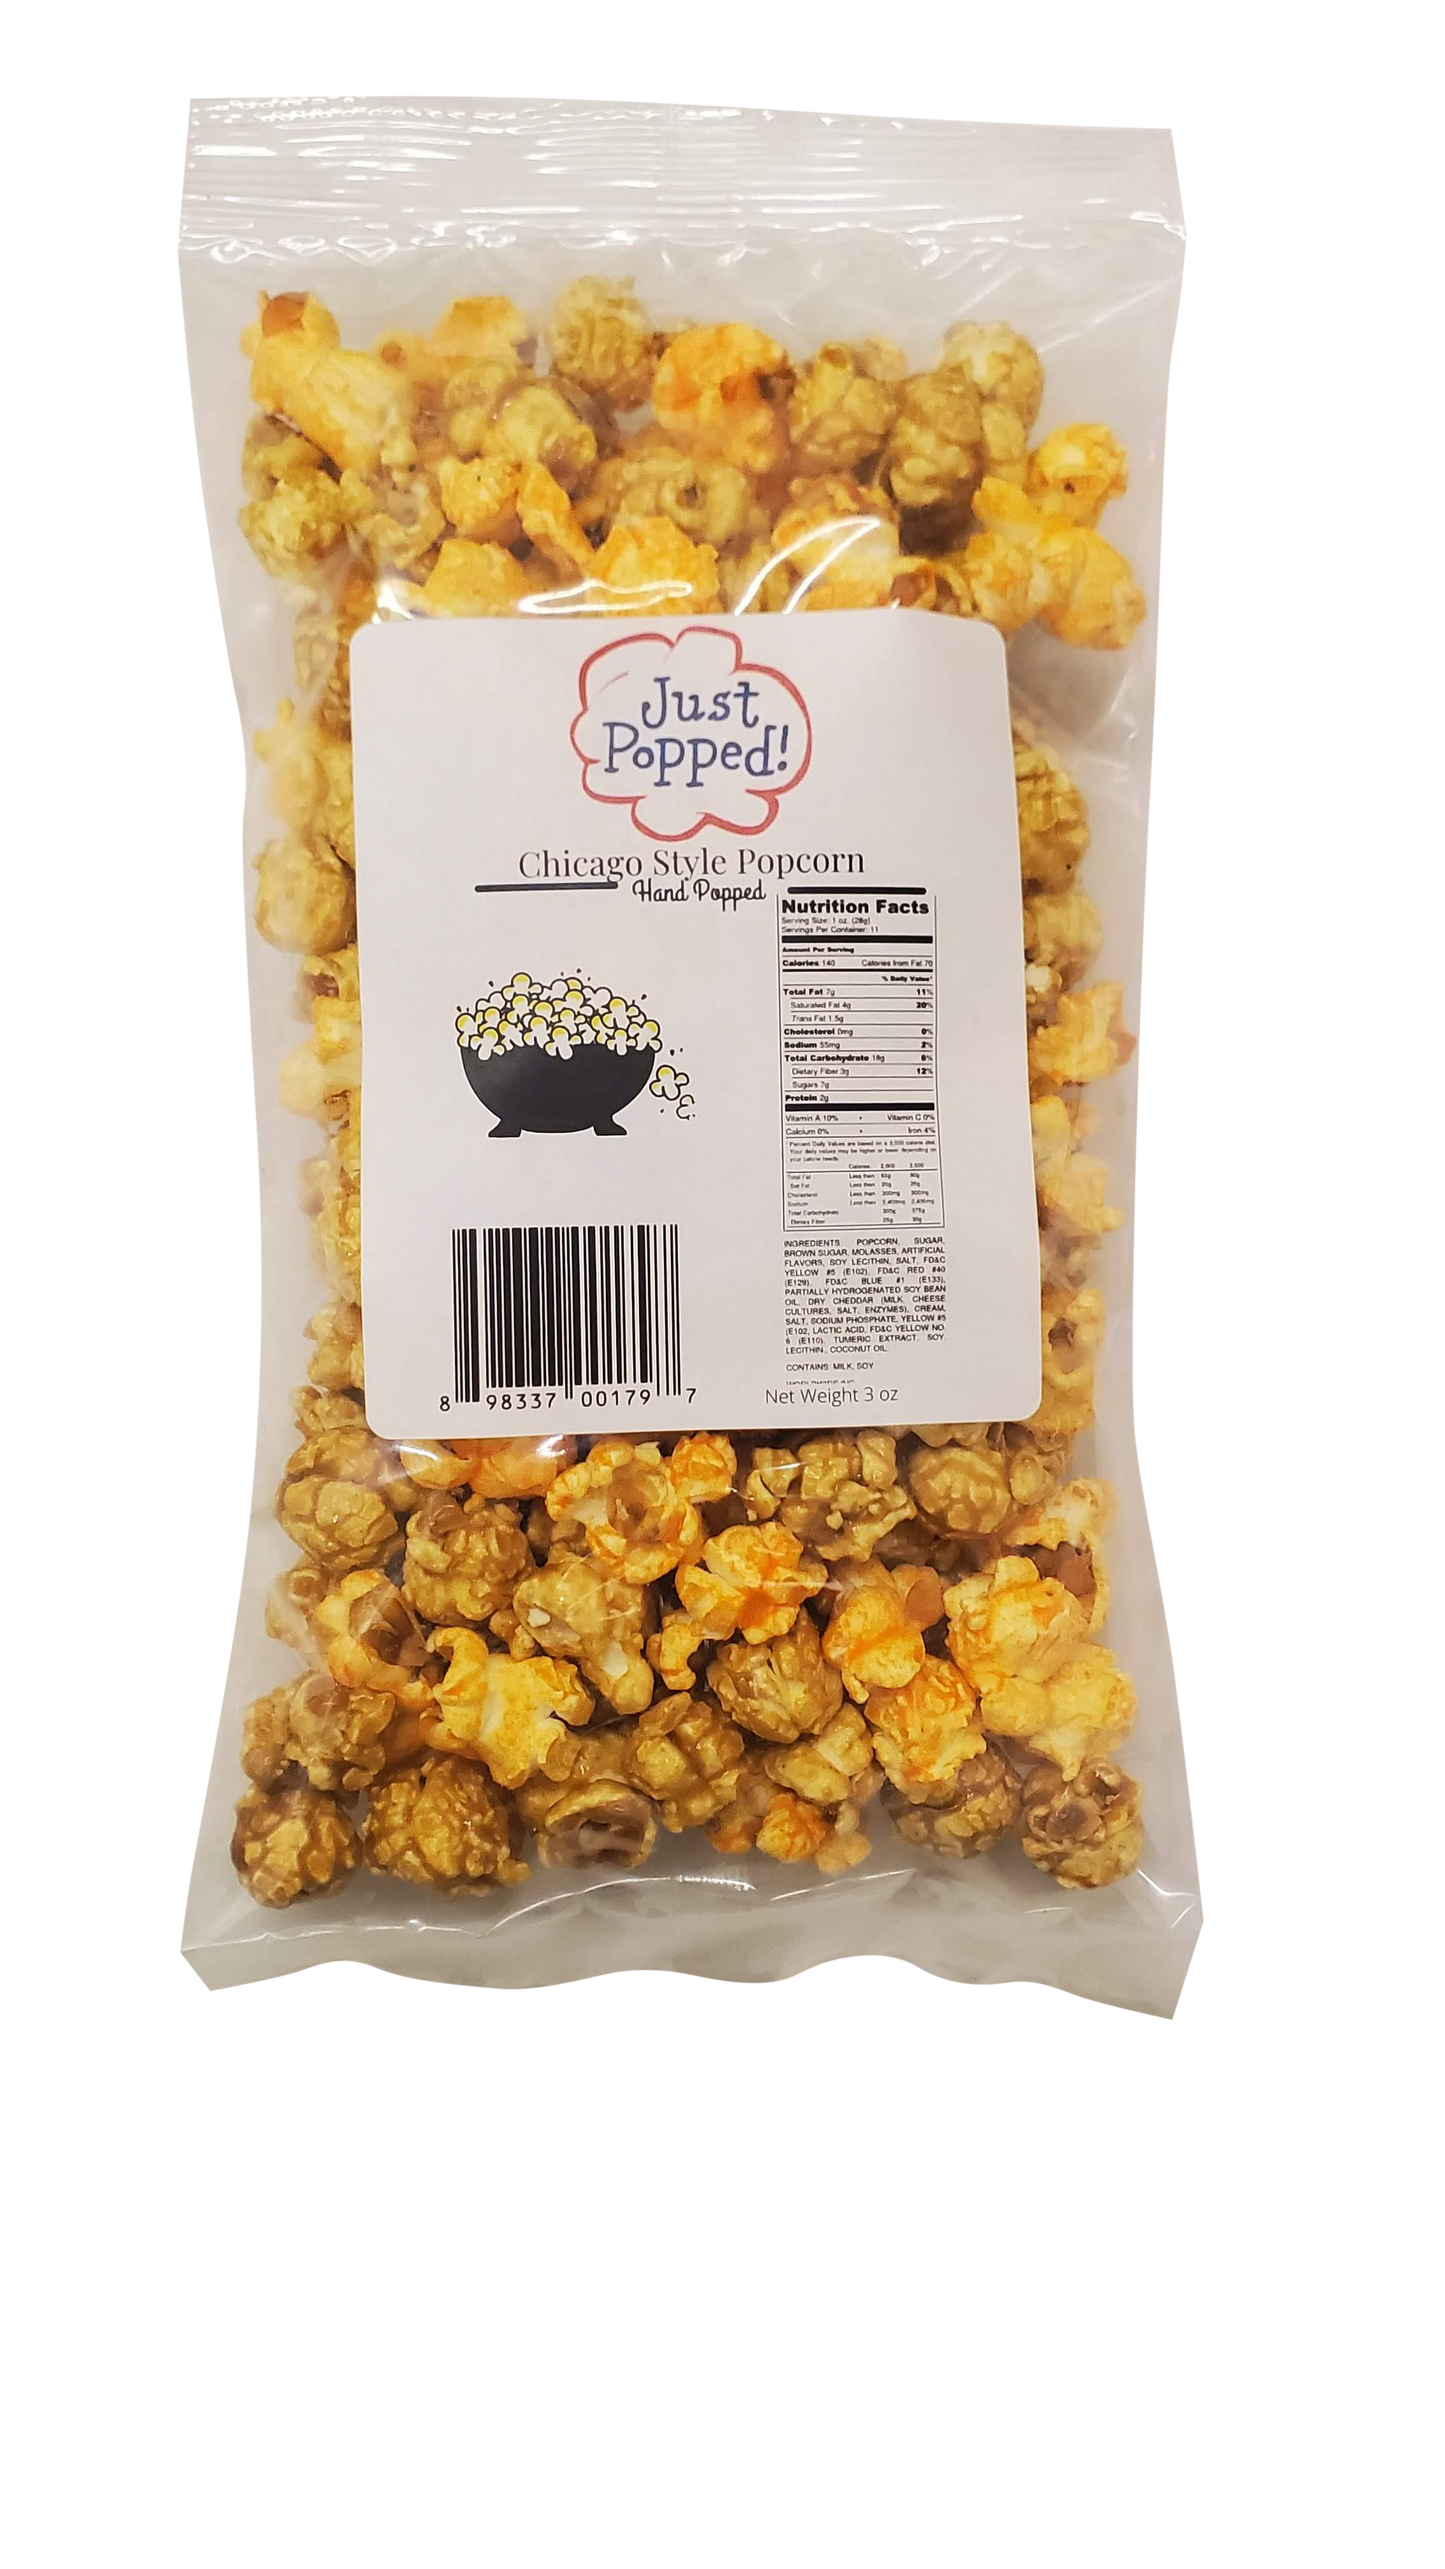 24 Count 3 oz Chicago Style Popcorn